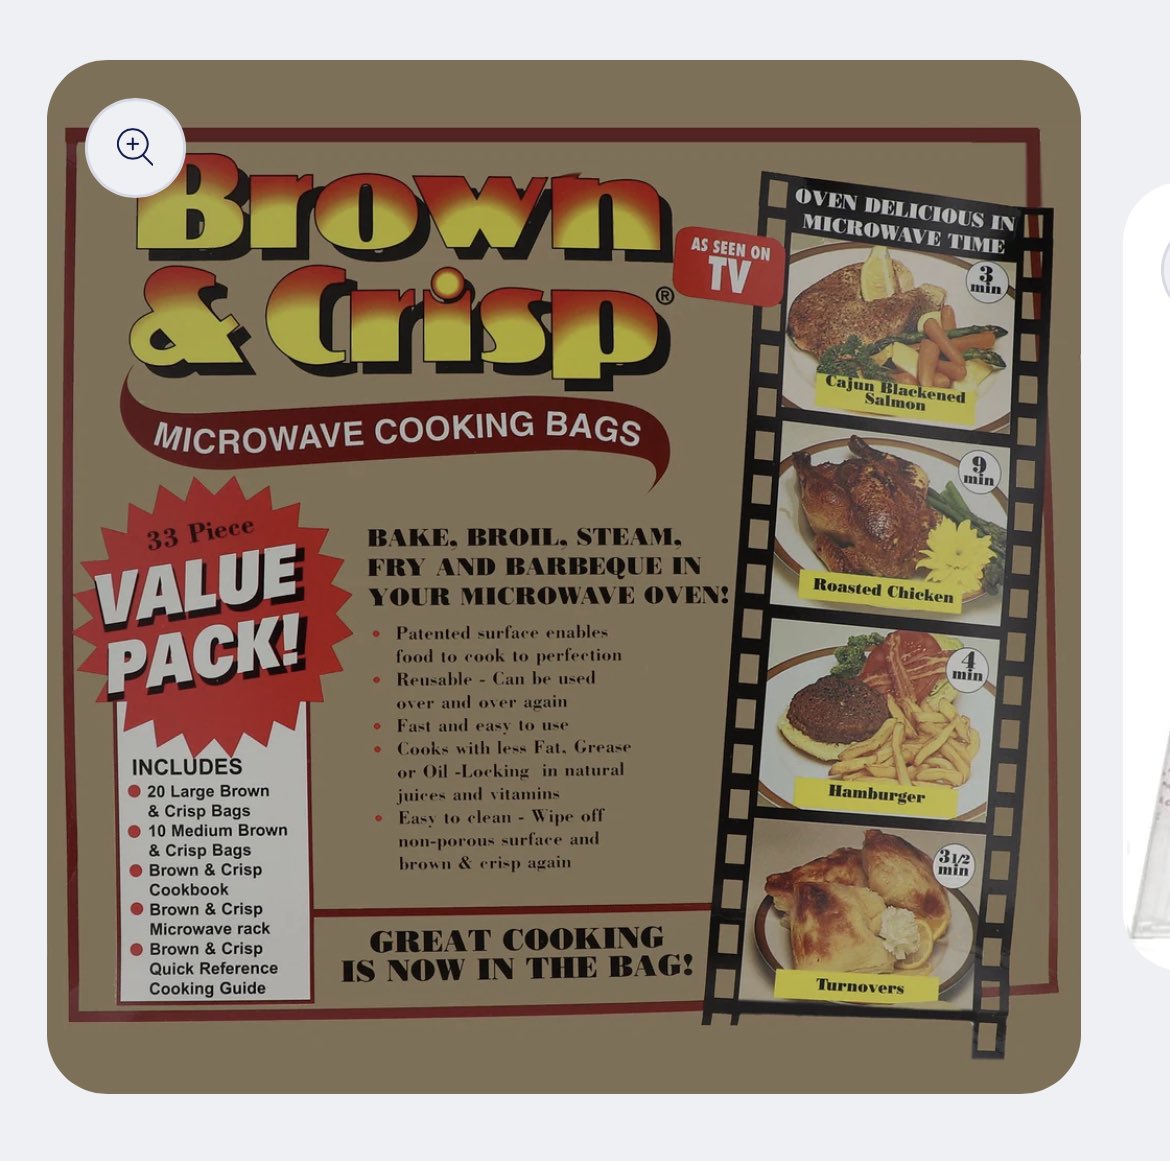 Brown & Crisp Microwave Cooking Bags- 33 Piece Value Pack